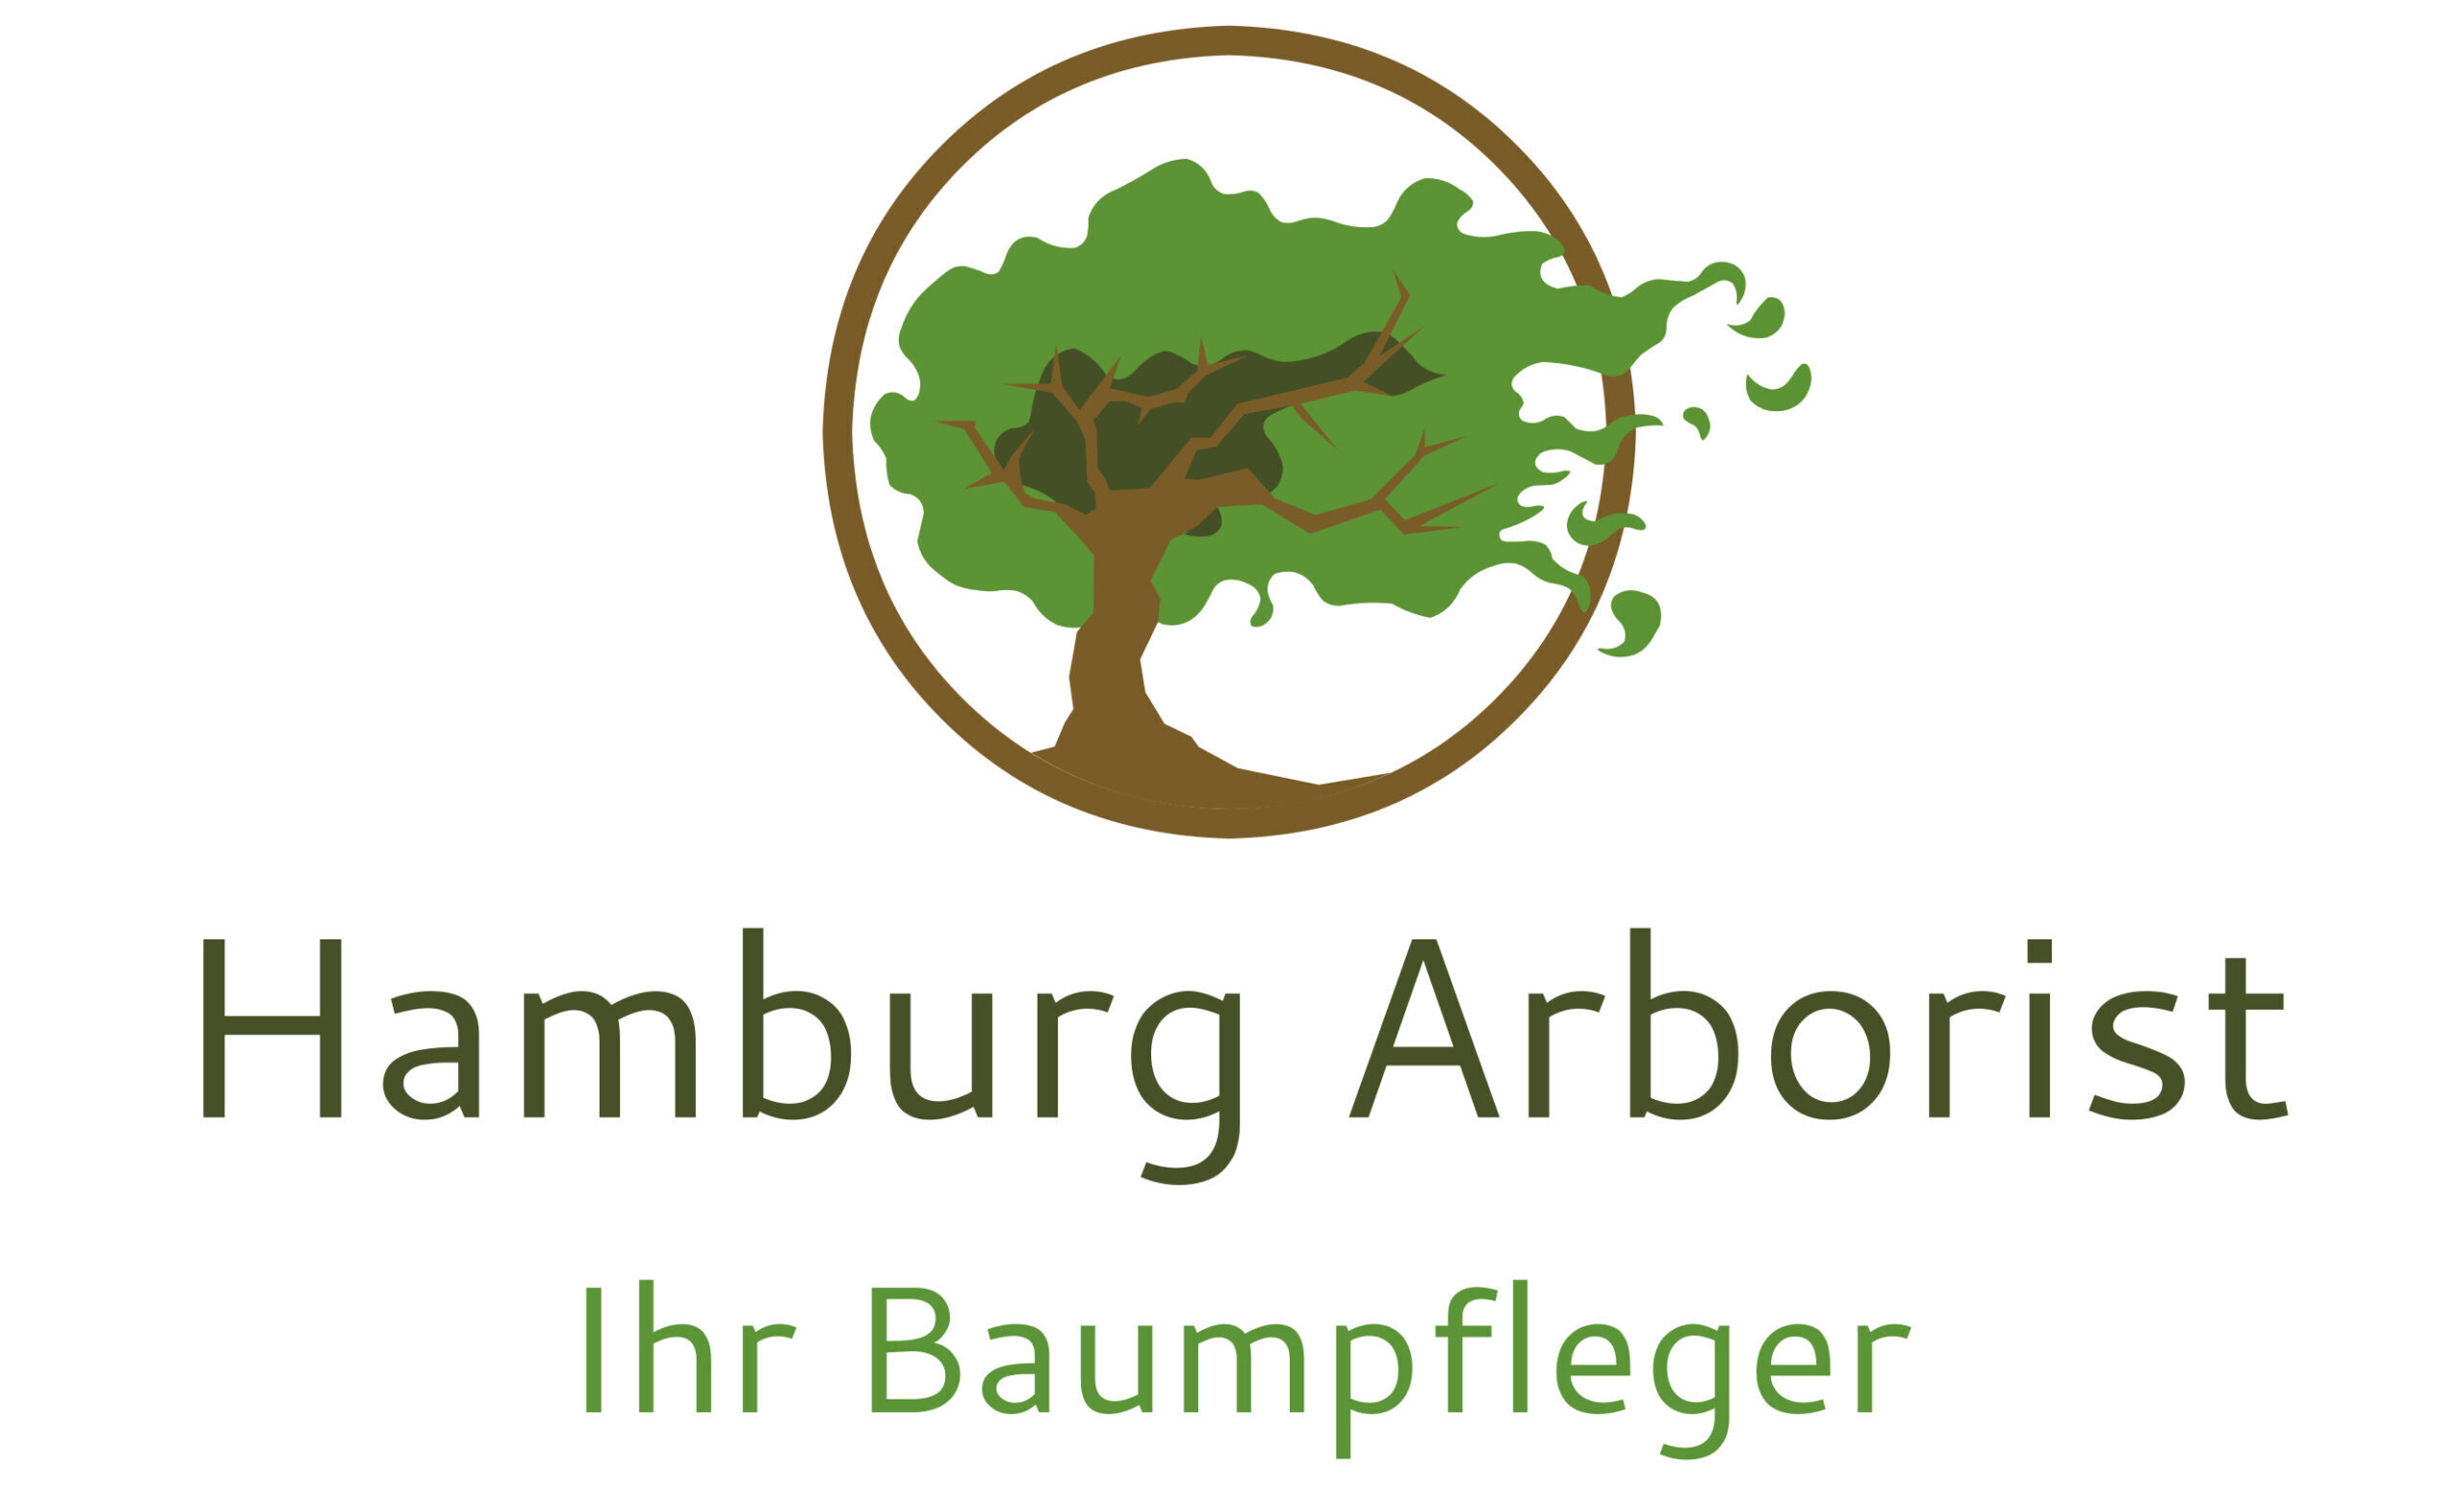 Hamburg Arborist